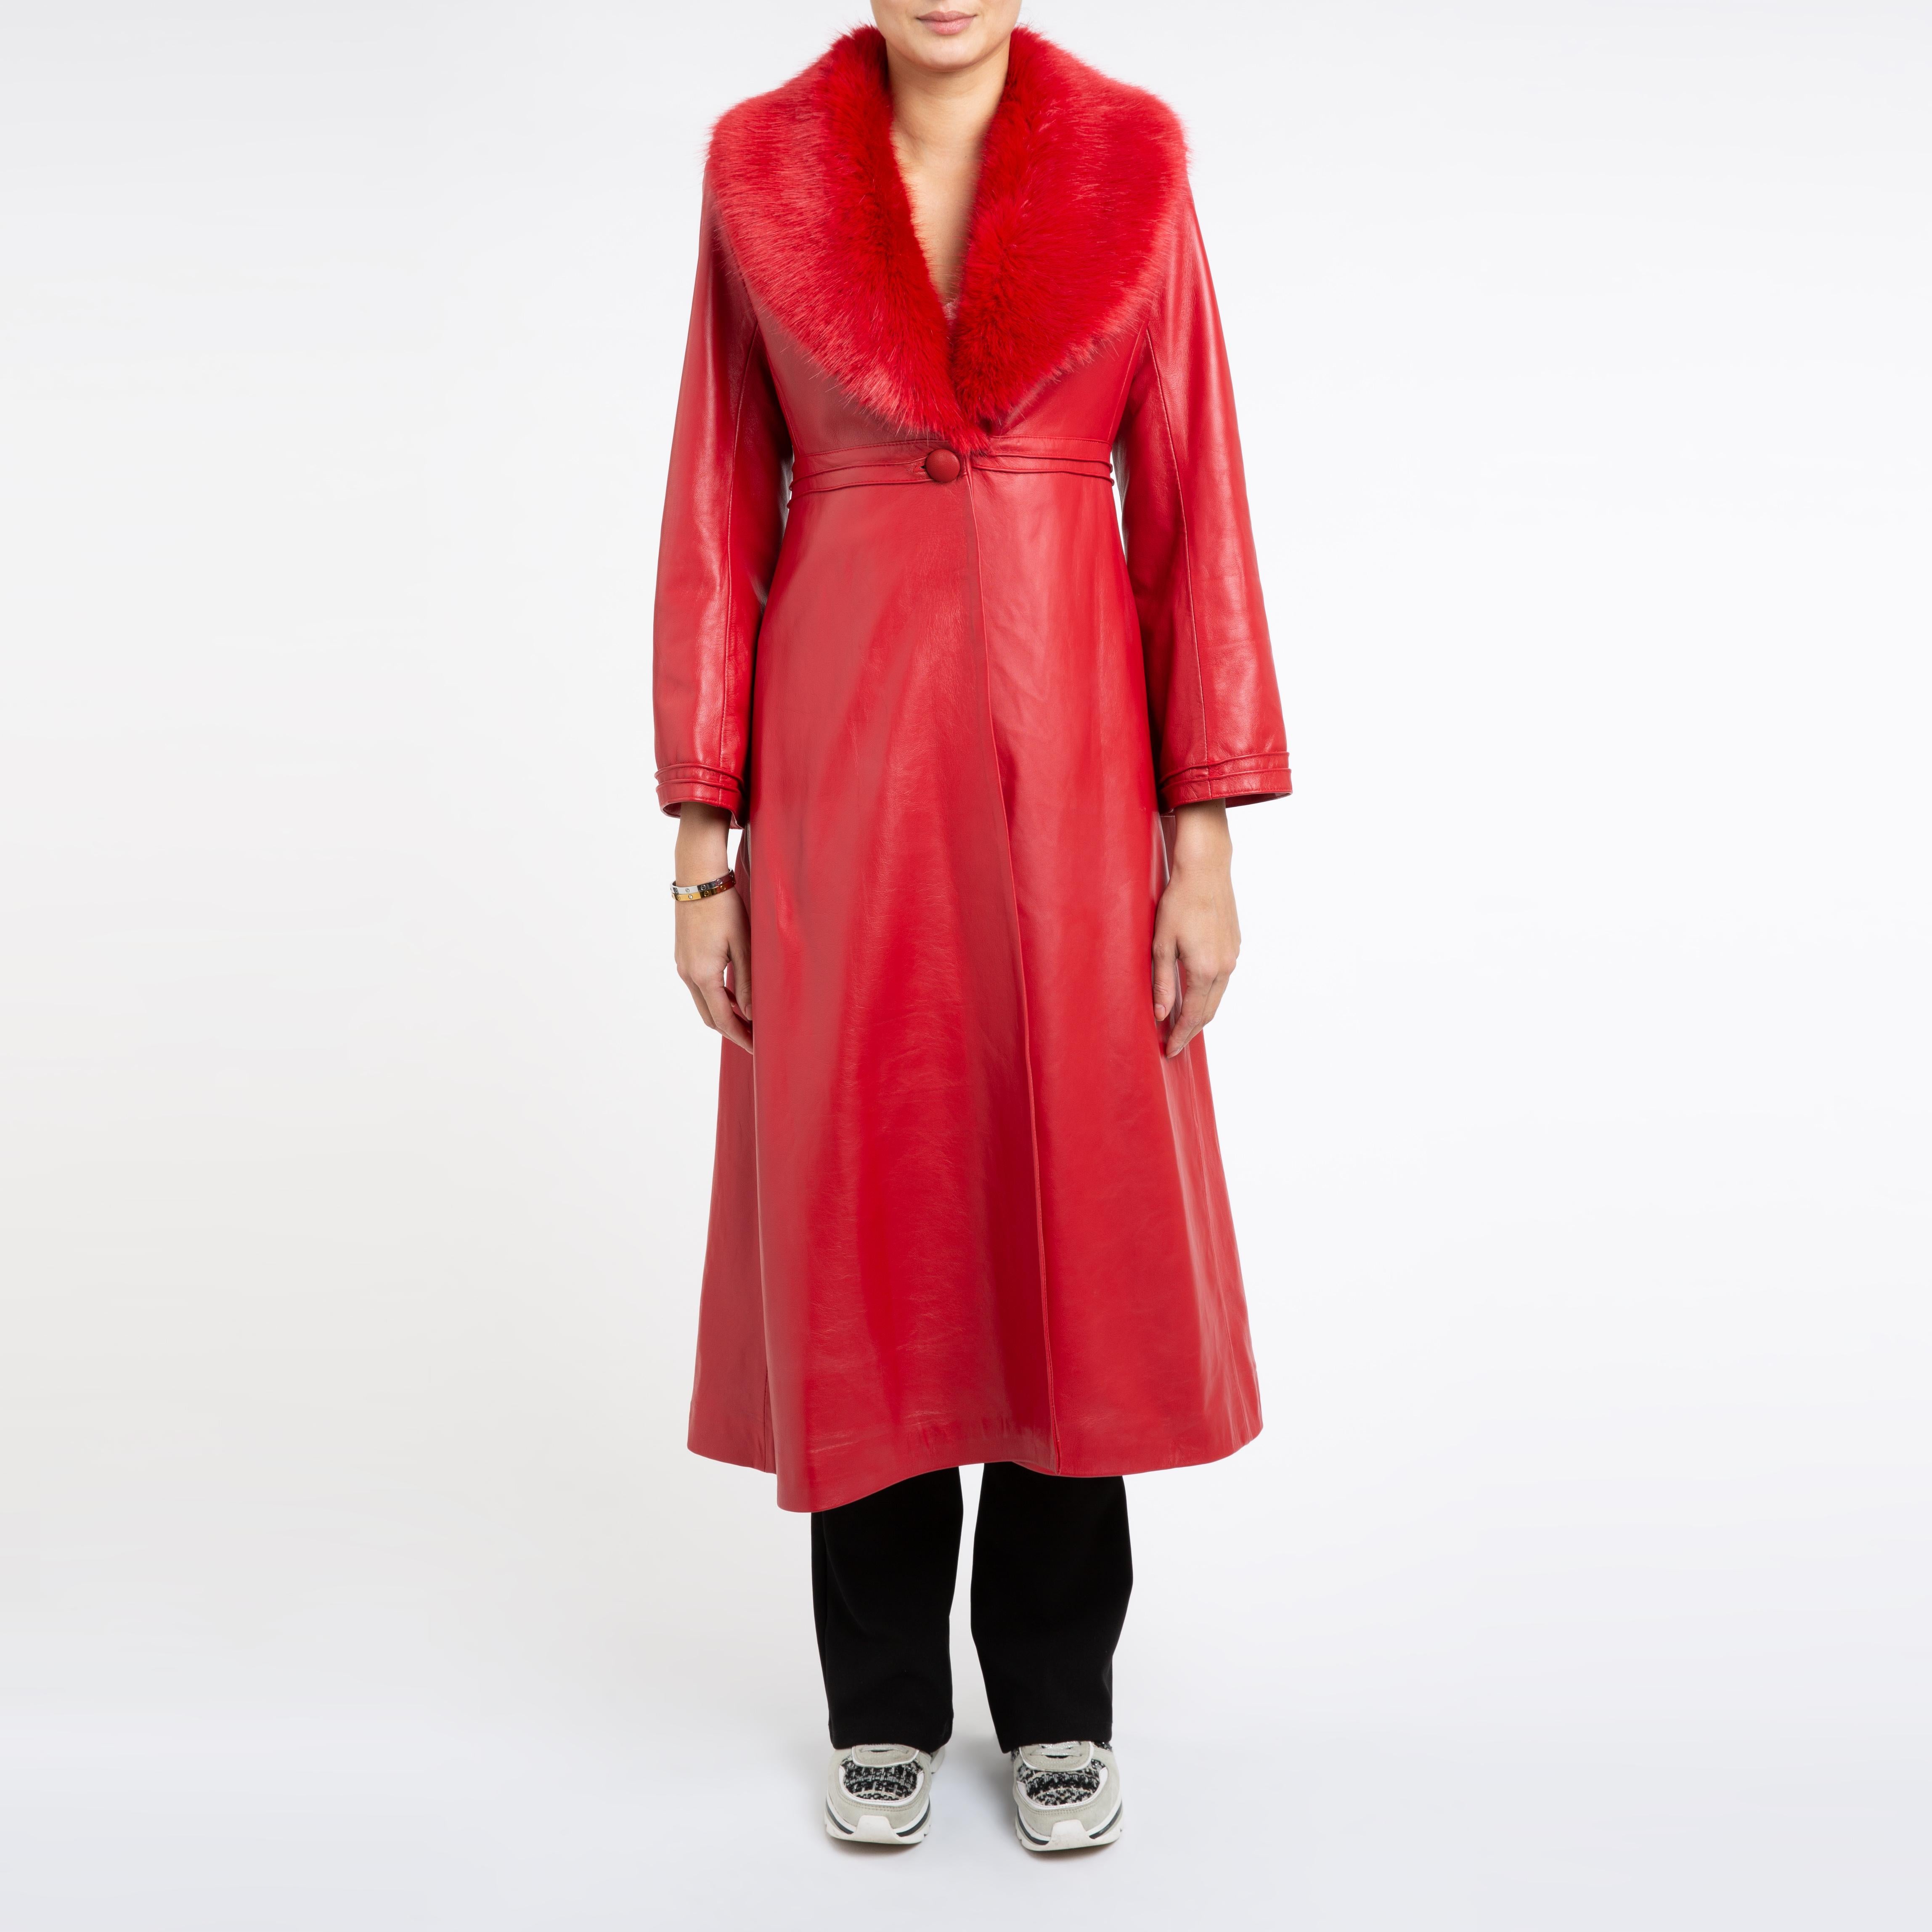 Women's Verheyen London Edward Leather Coat with Faux Fur Collar in Red - Size uk 16 For Sale